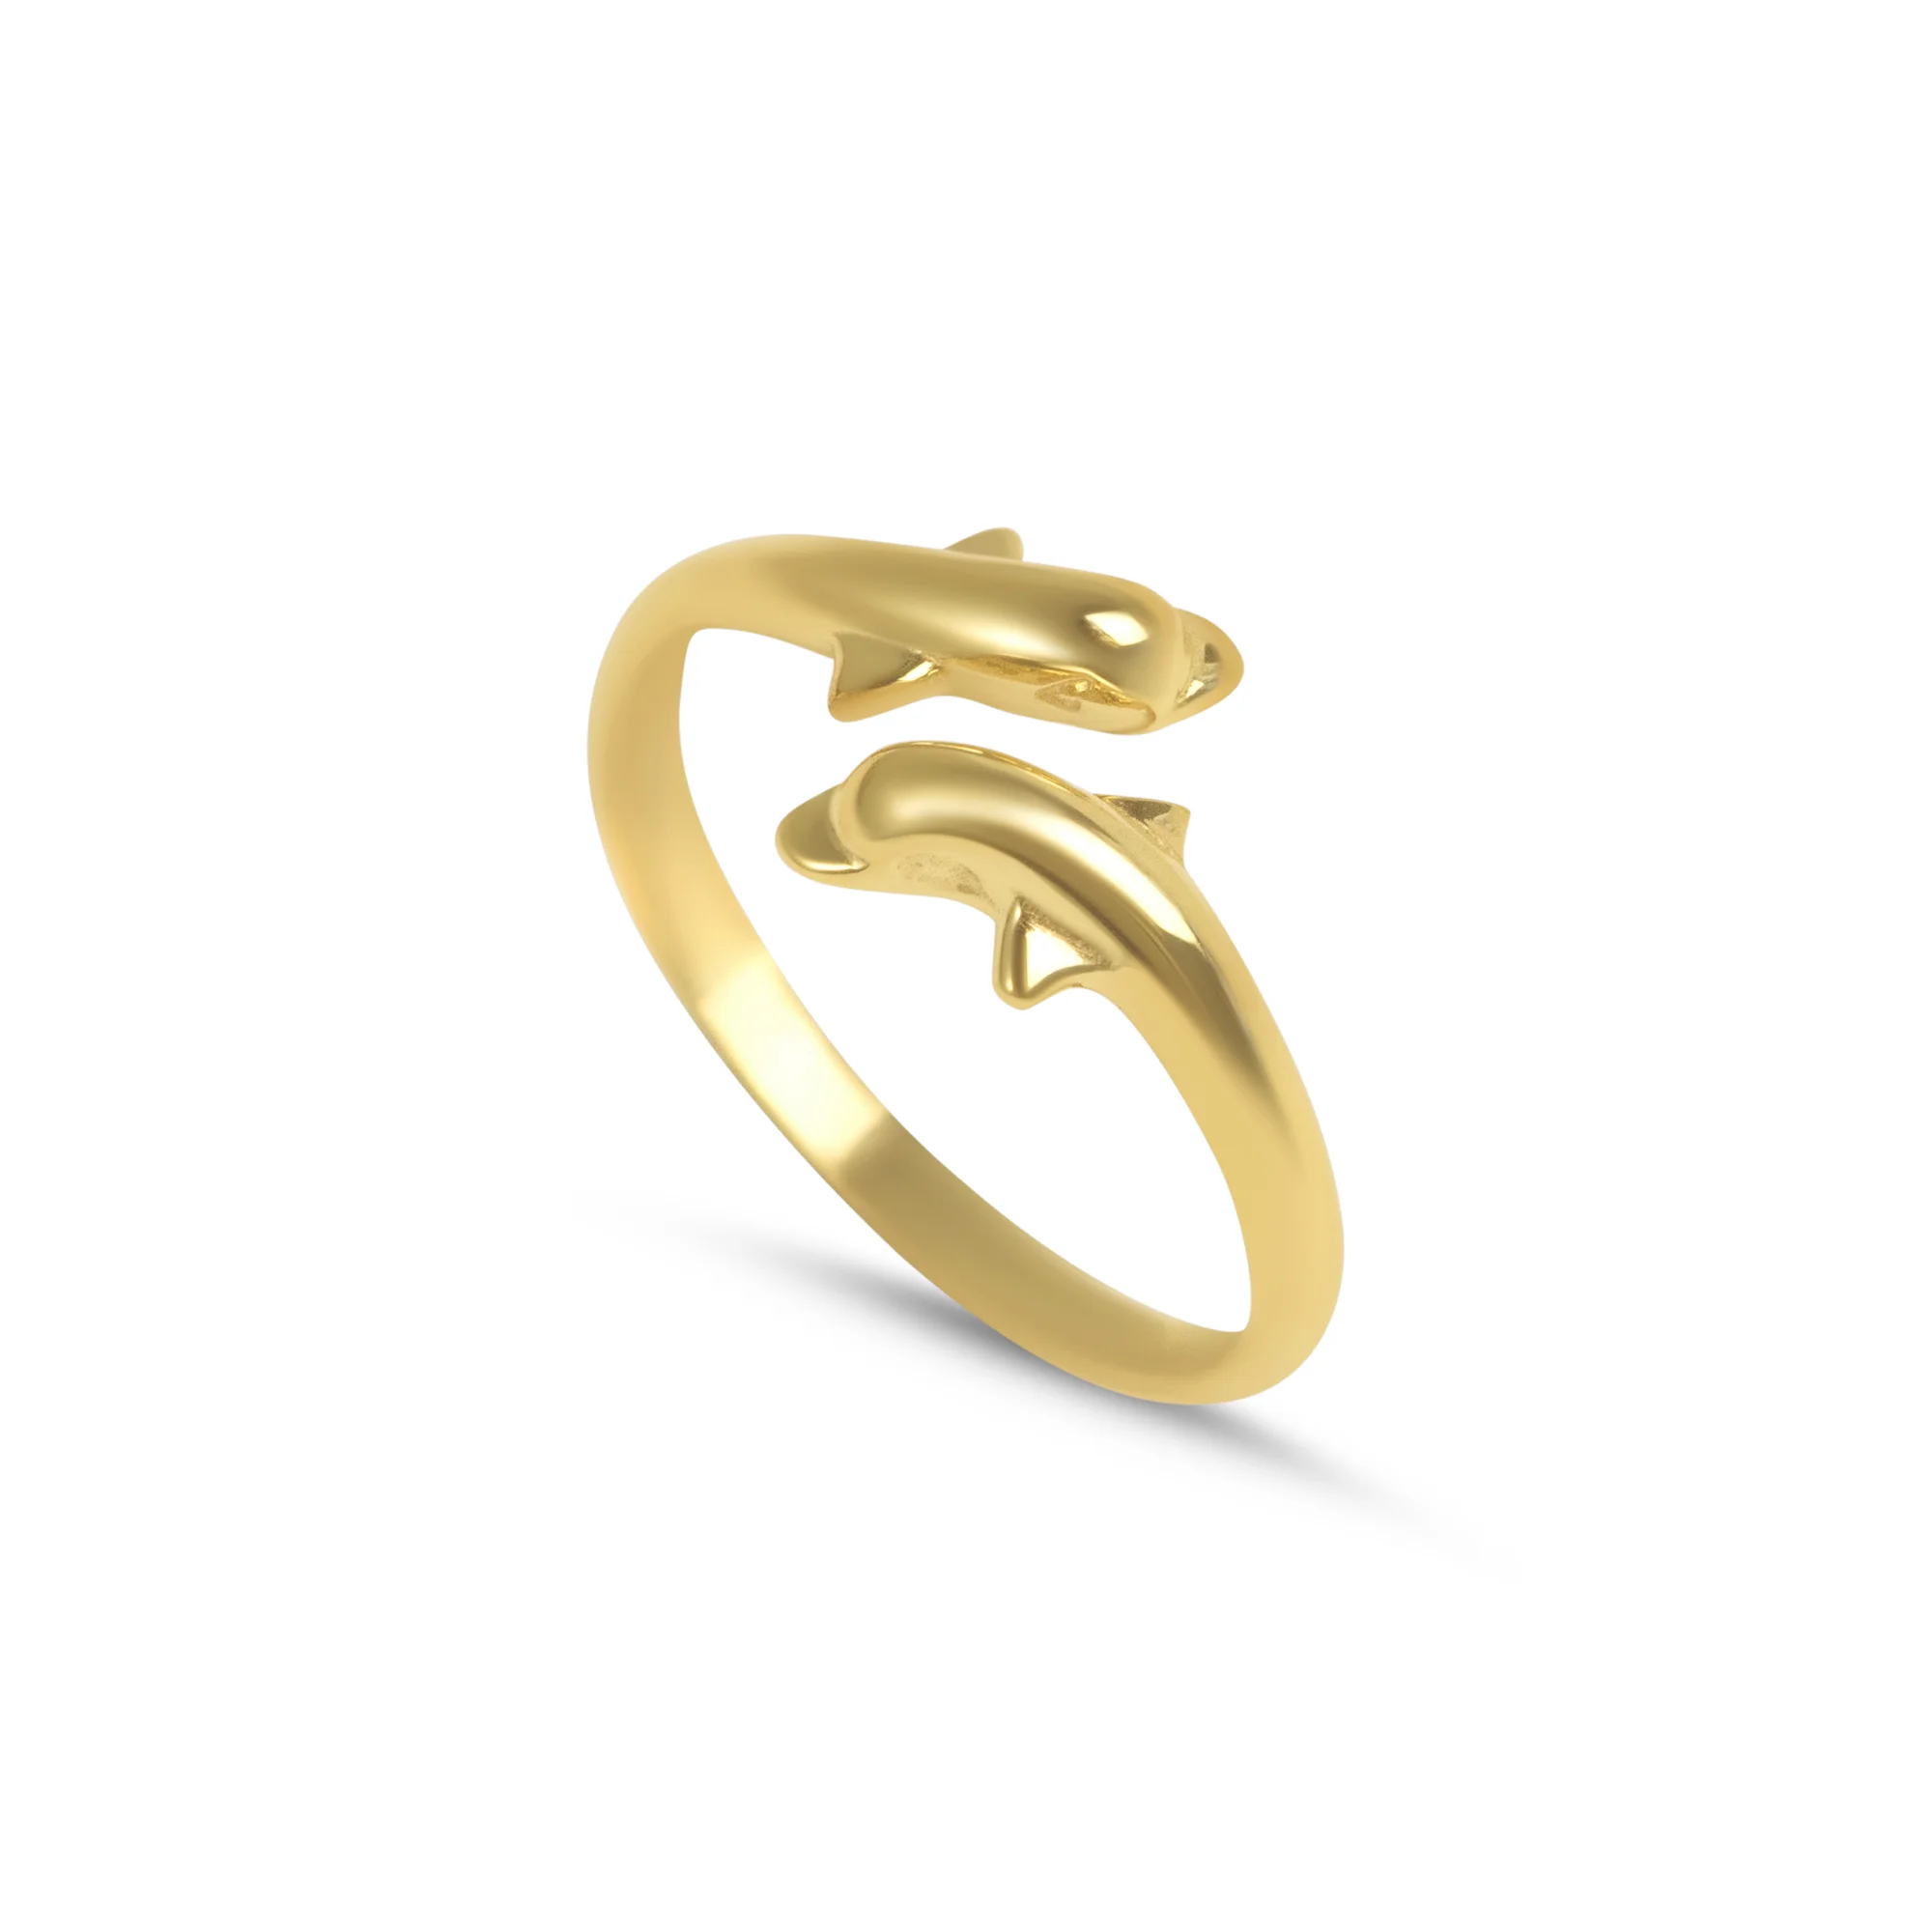 Thalassius Dolphin Ring #1